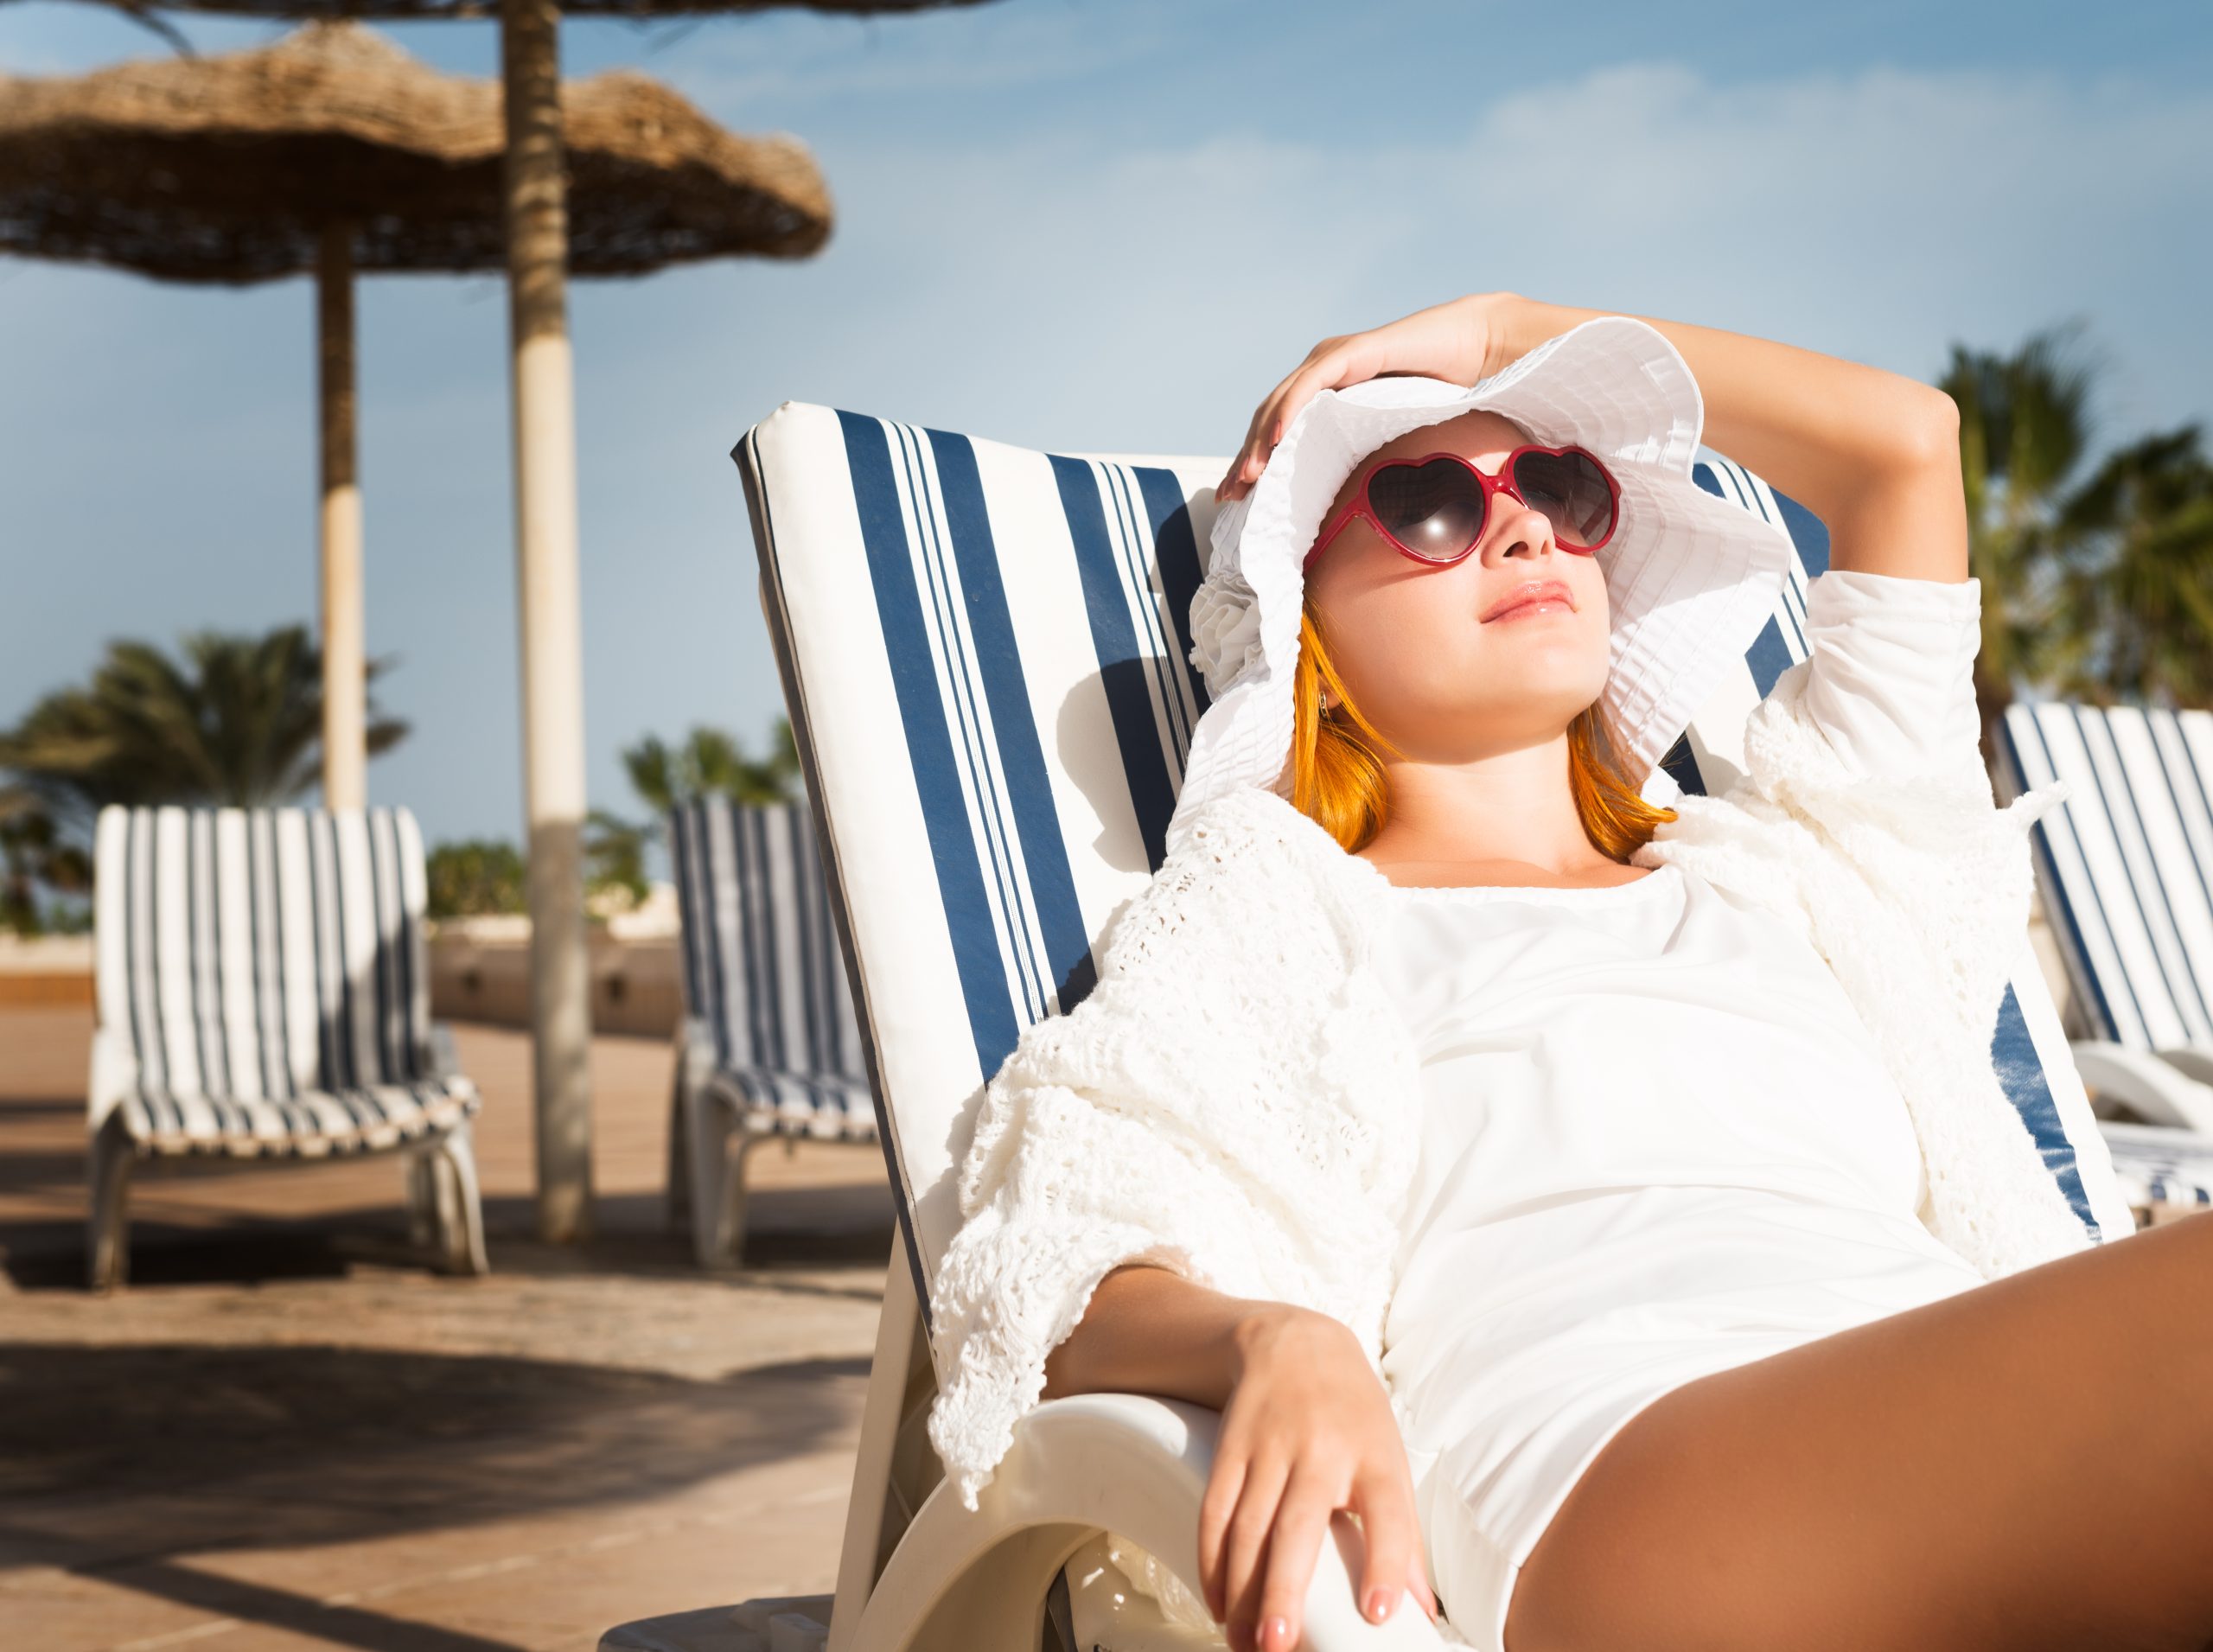 Young woman enjoying sun on sunbed at tourist resort